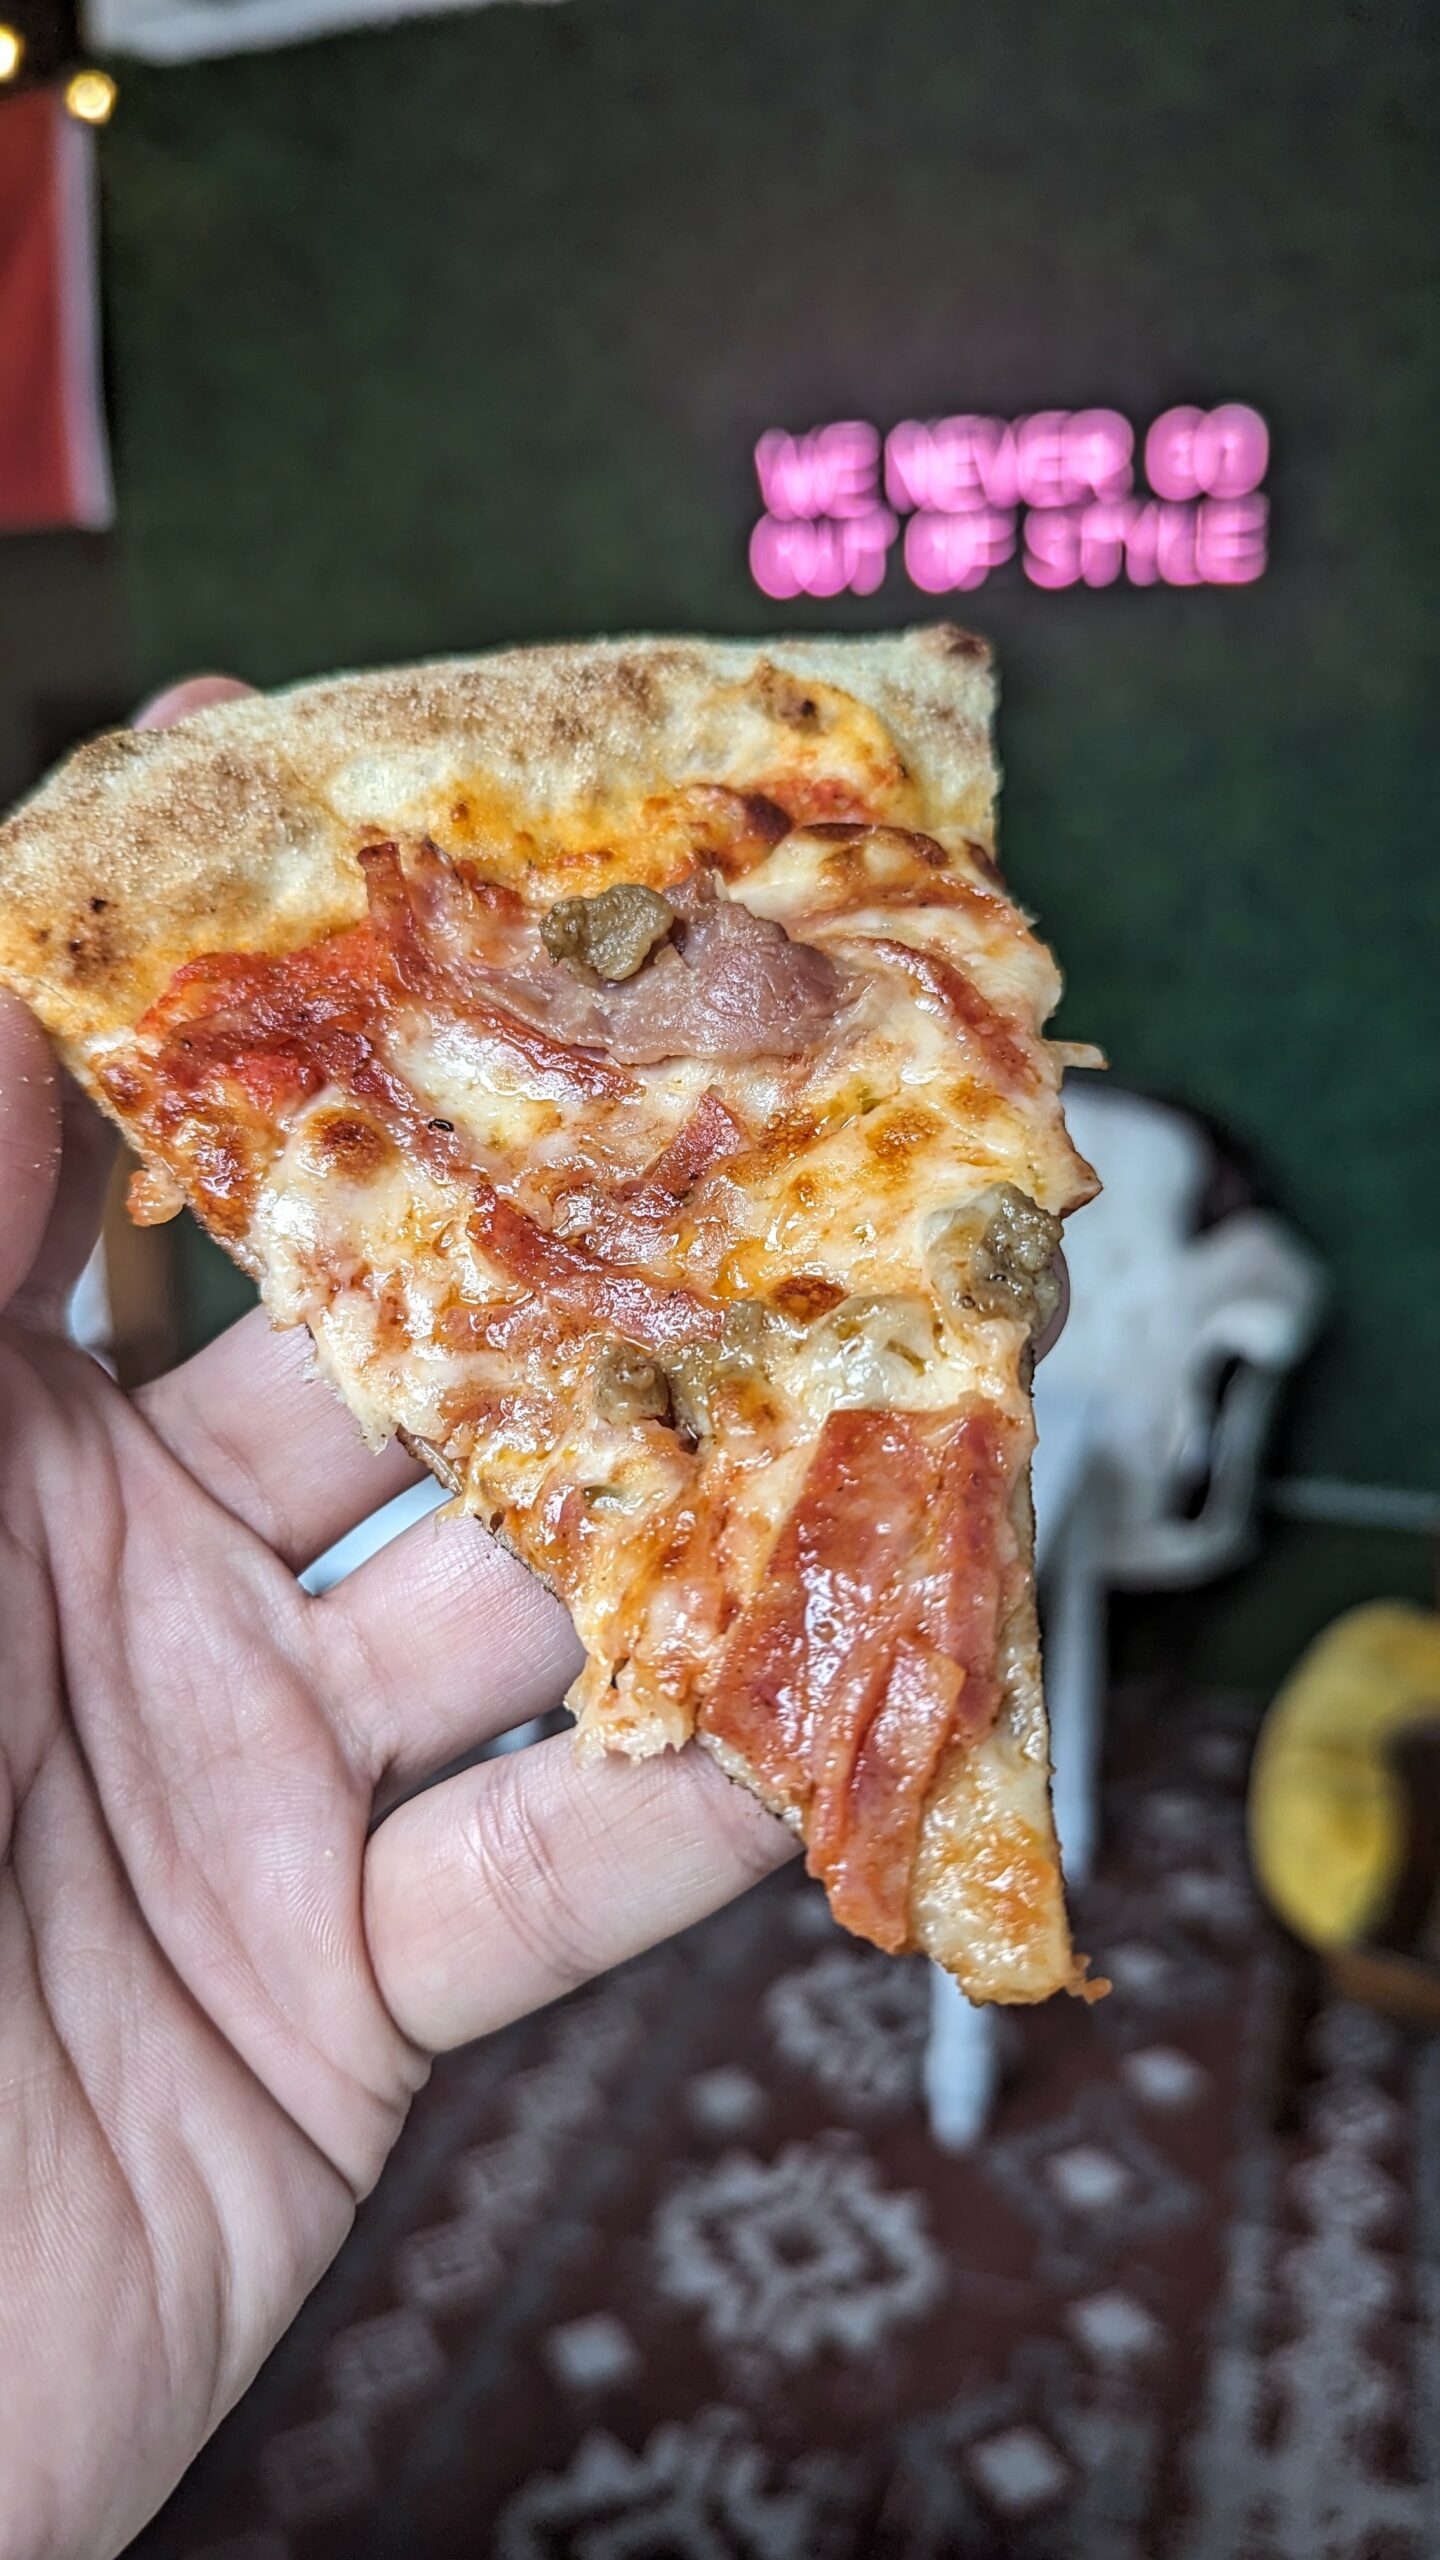 Pizza, anyone?